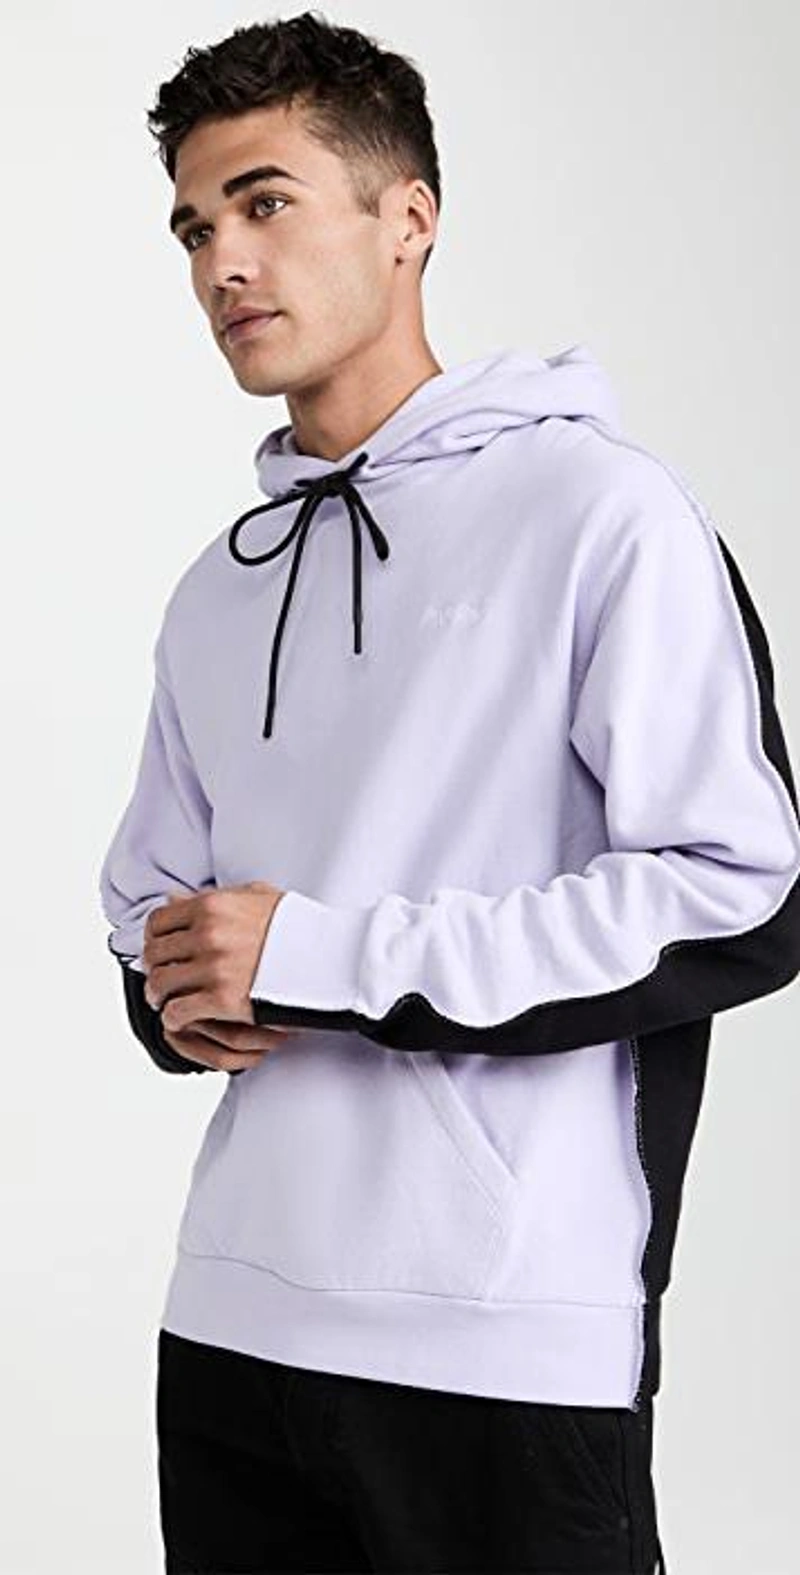 shopbop.com's Posts | 搭配: Marni Sweatshirt In Light Lila/black；Reebok White Classic Low Top Leather Sneakers